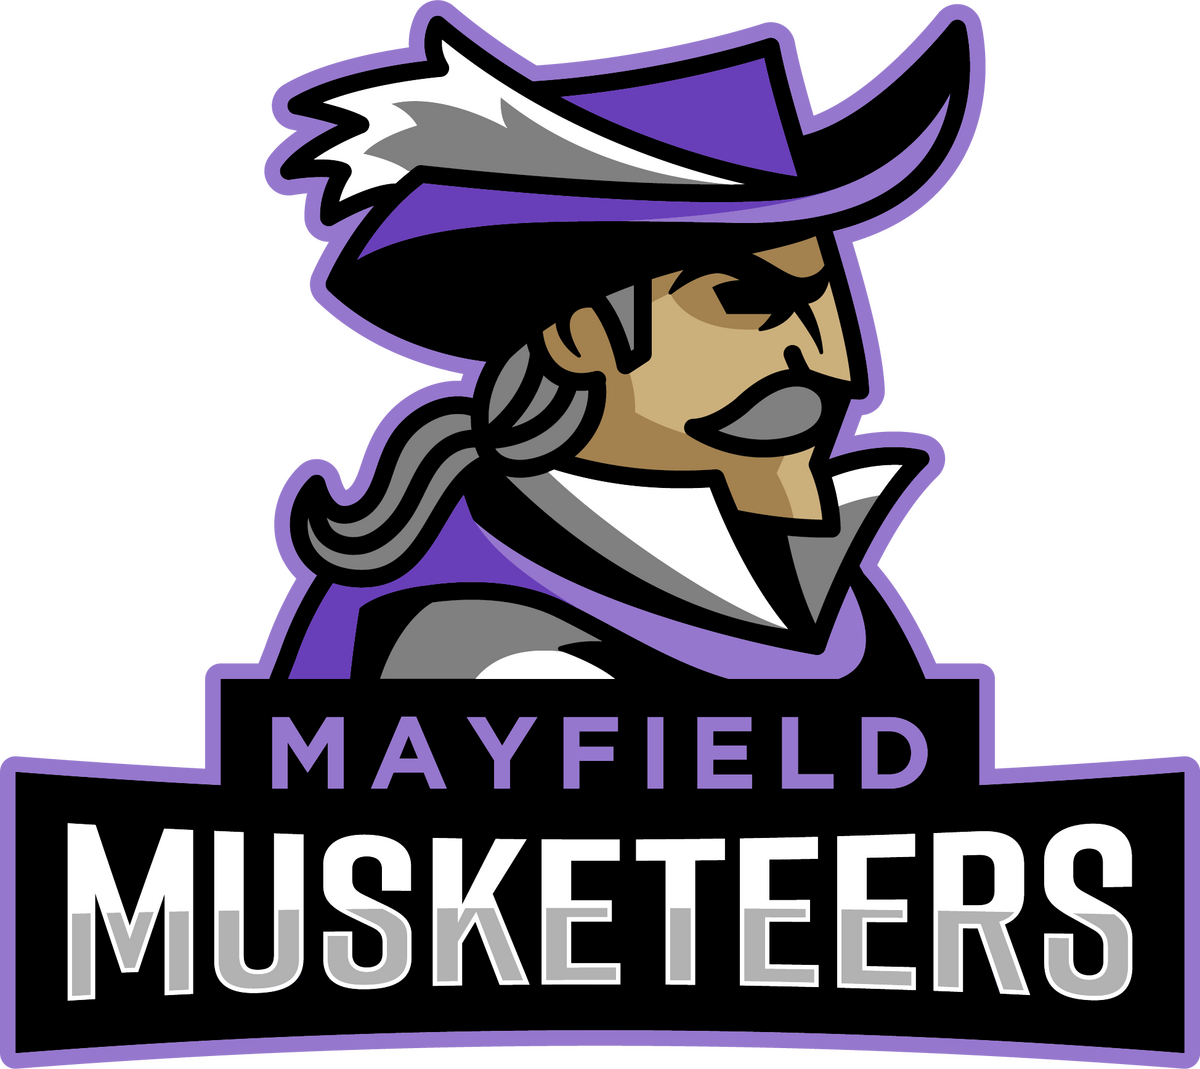 Mayfield musketeer logo of a musketeer man wearing purple